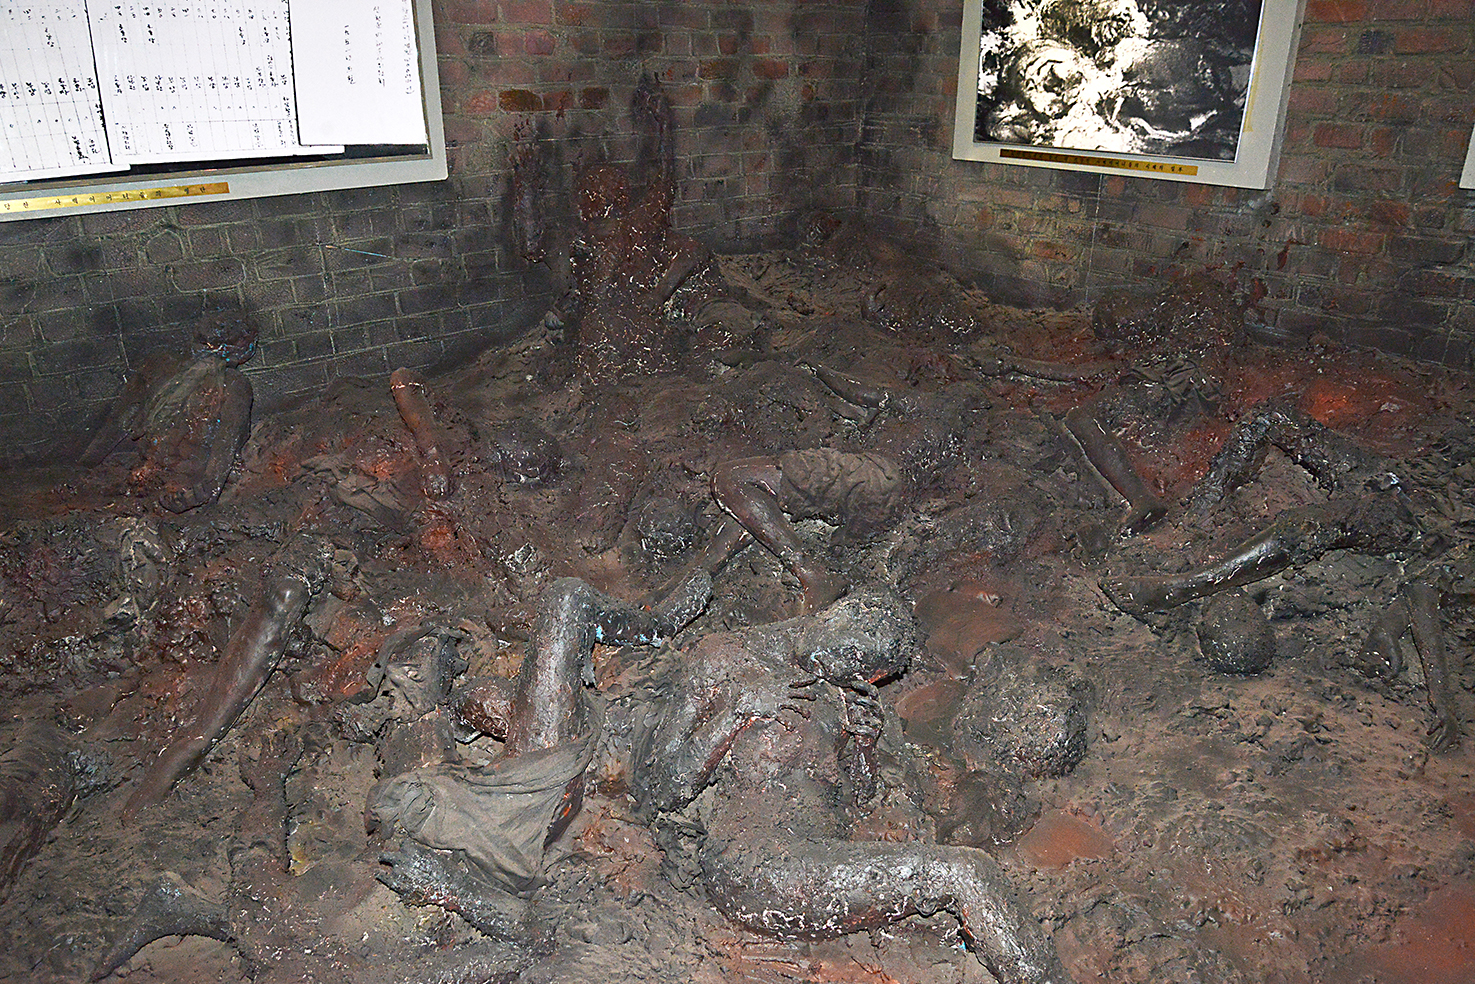 49 Massacre Museum